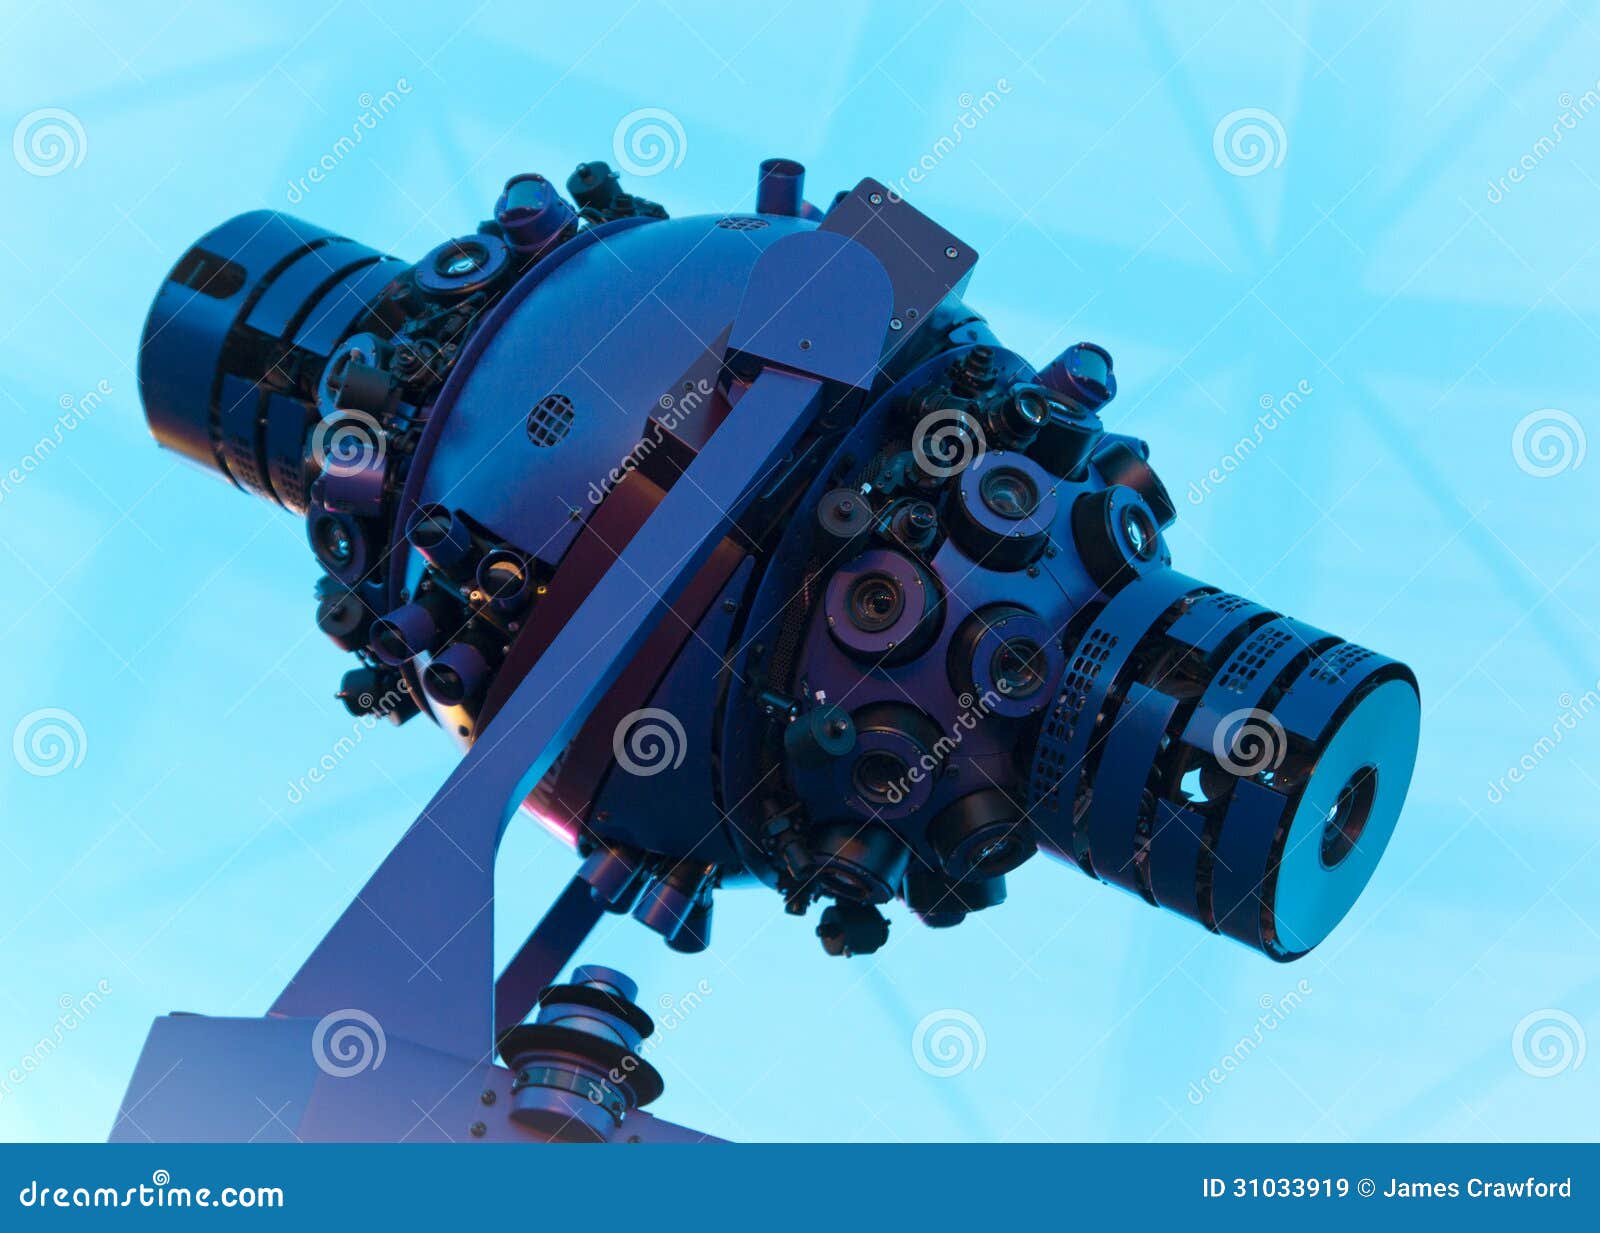 Planetarium star projector stock image. Image of planet - 31033919